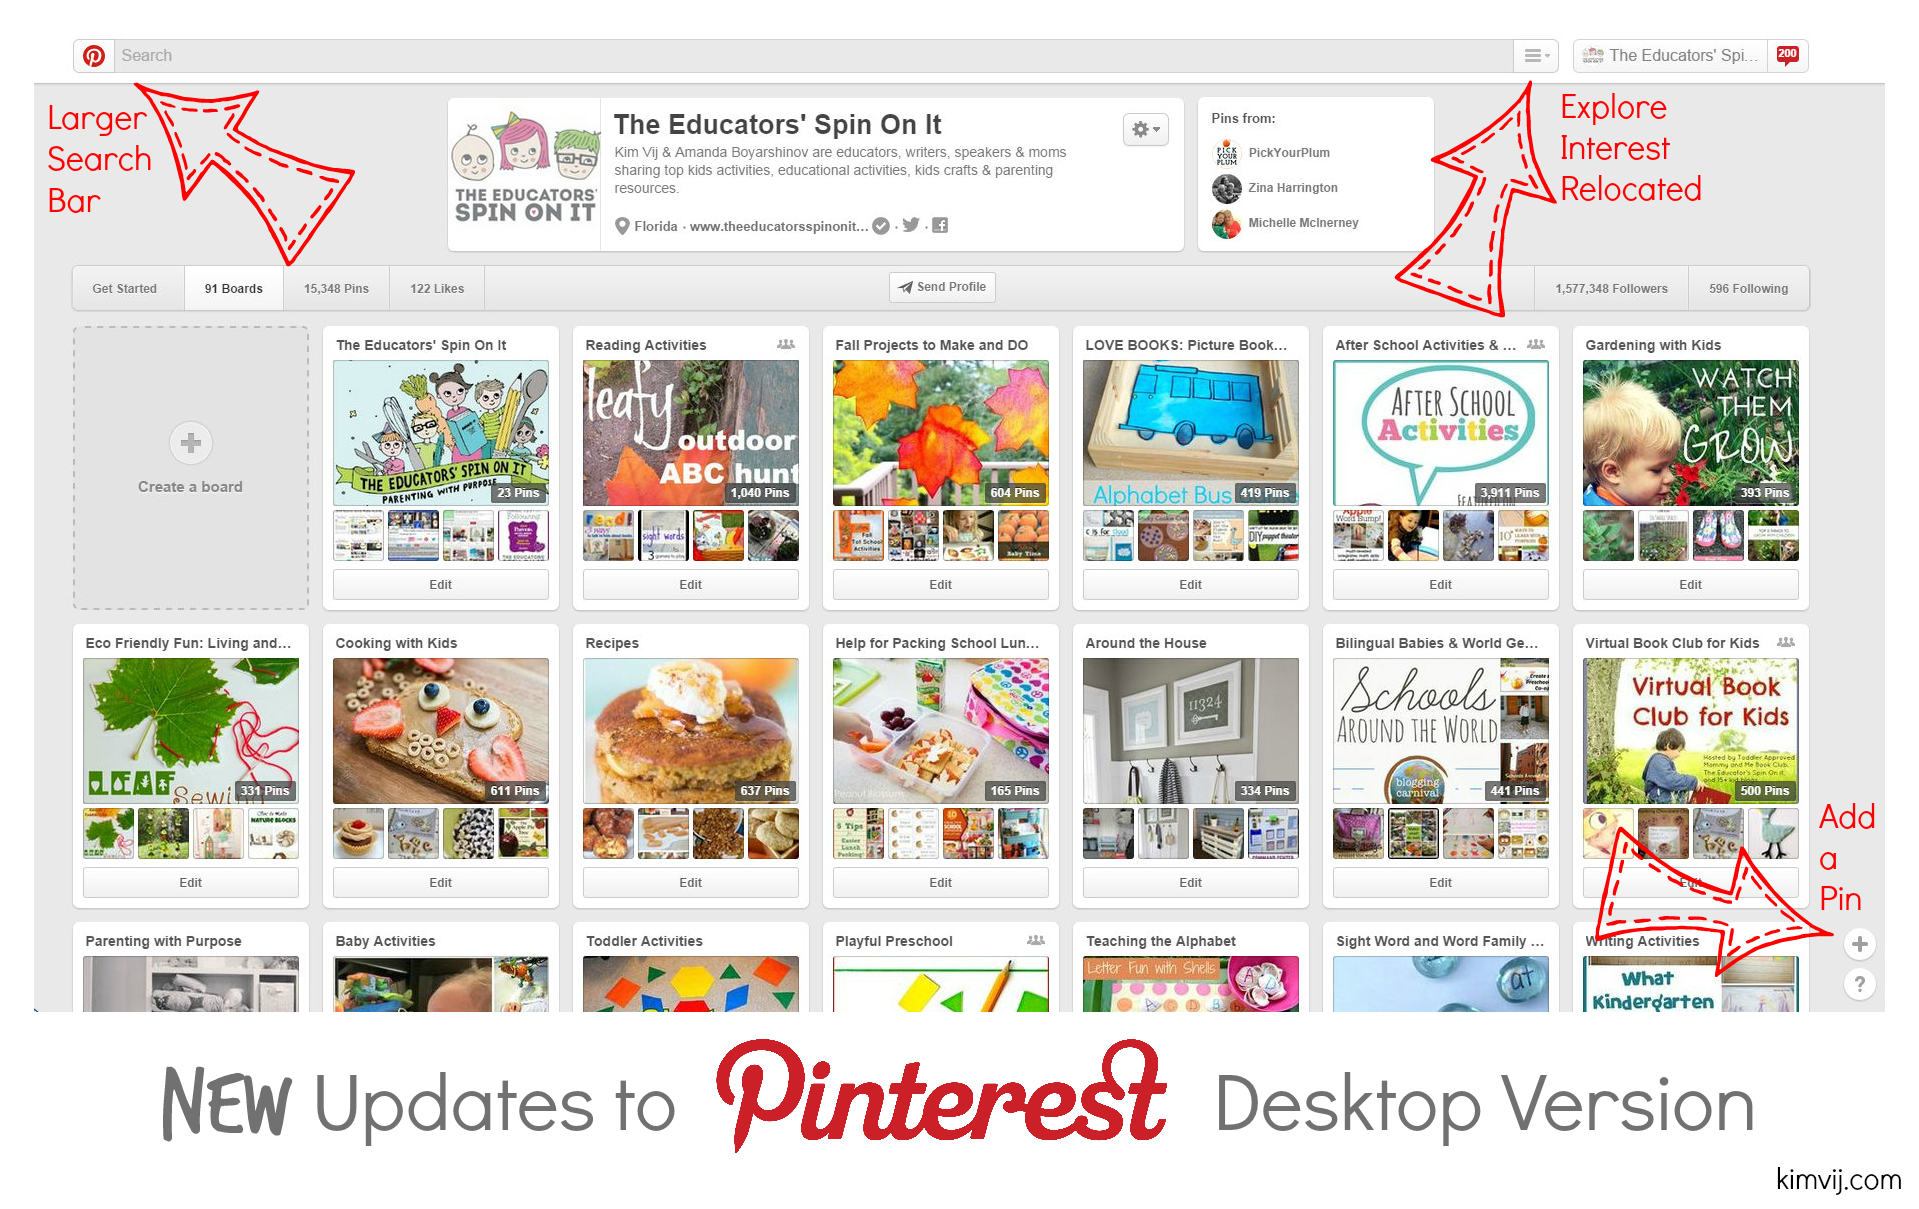 New Updates to Pinterest Desktop Version 